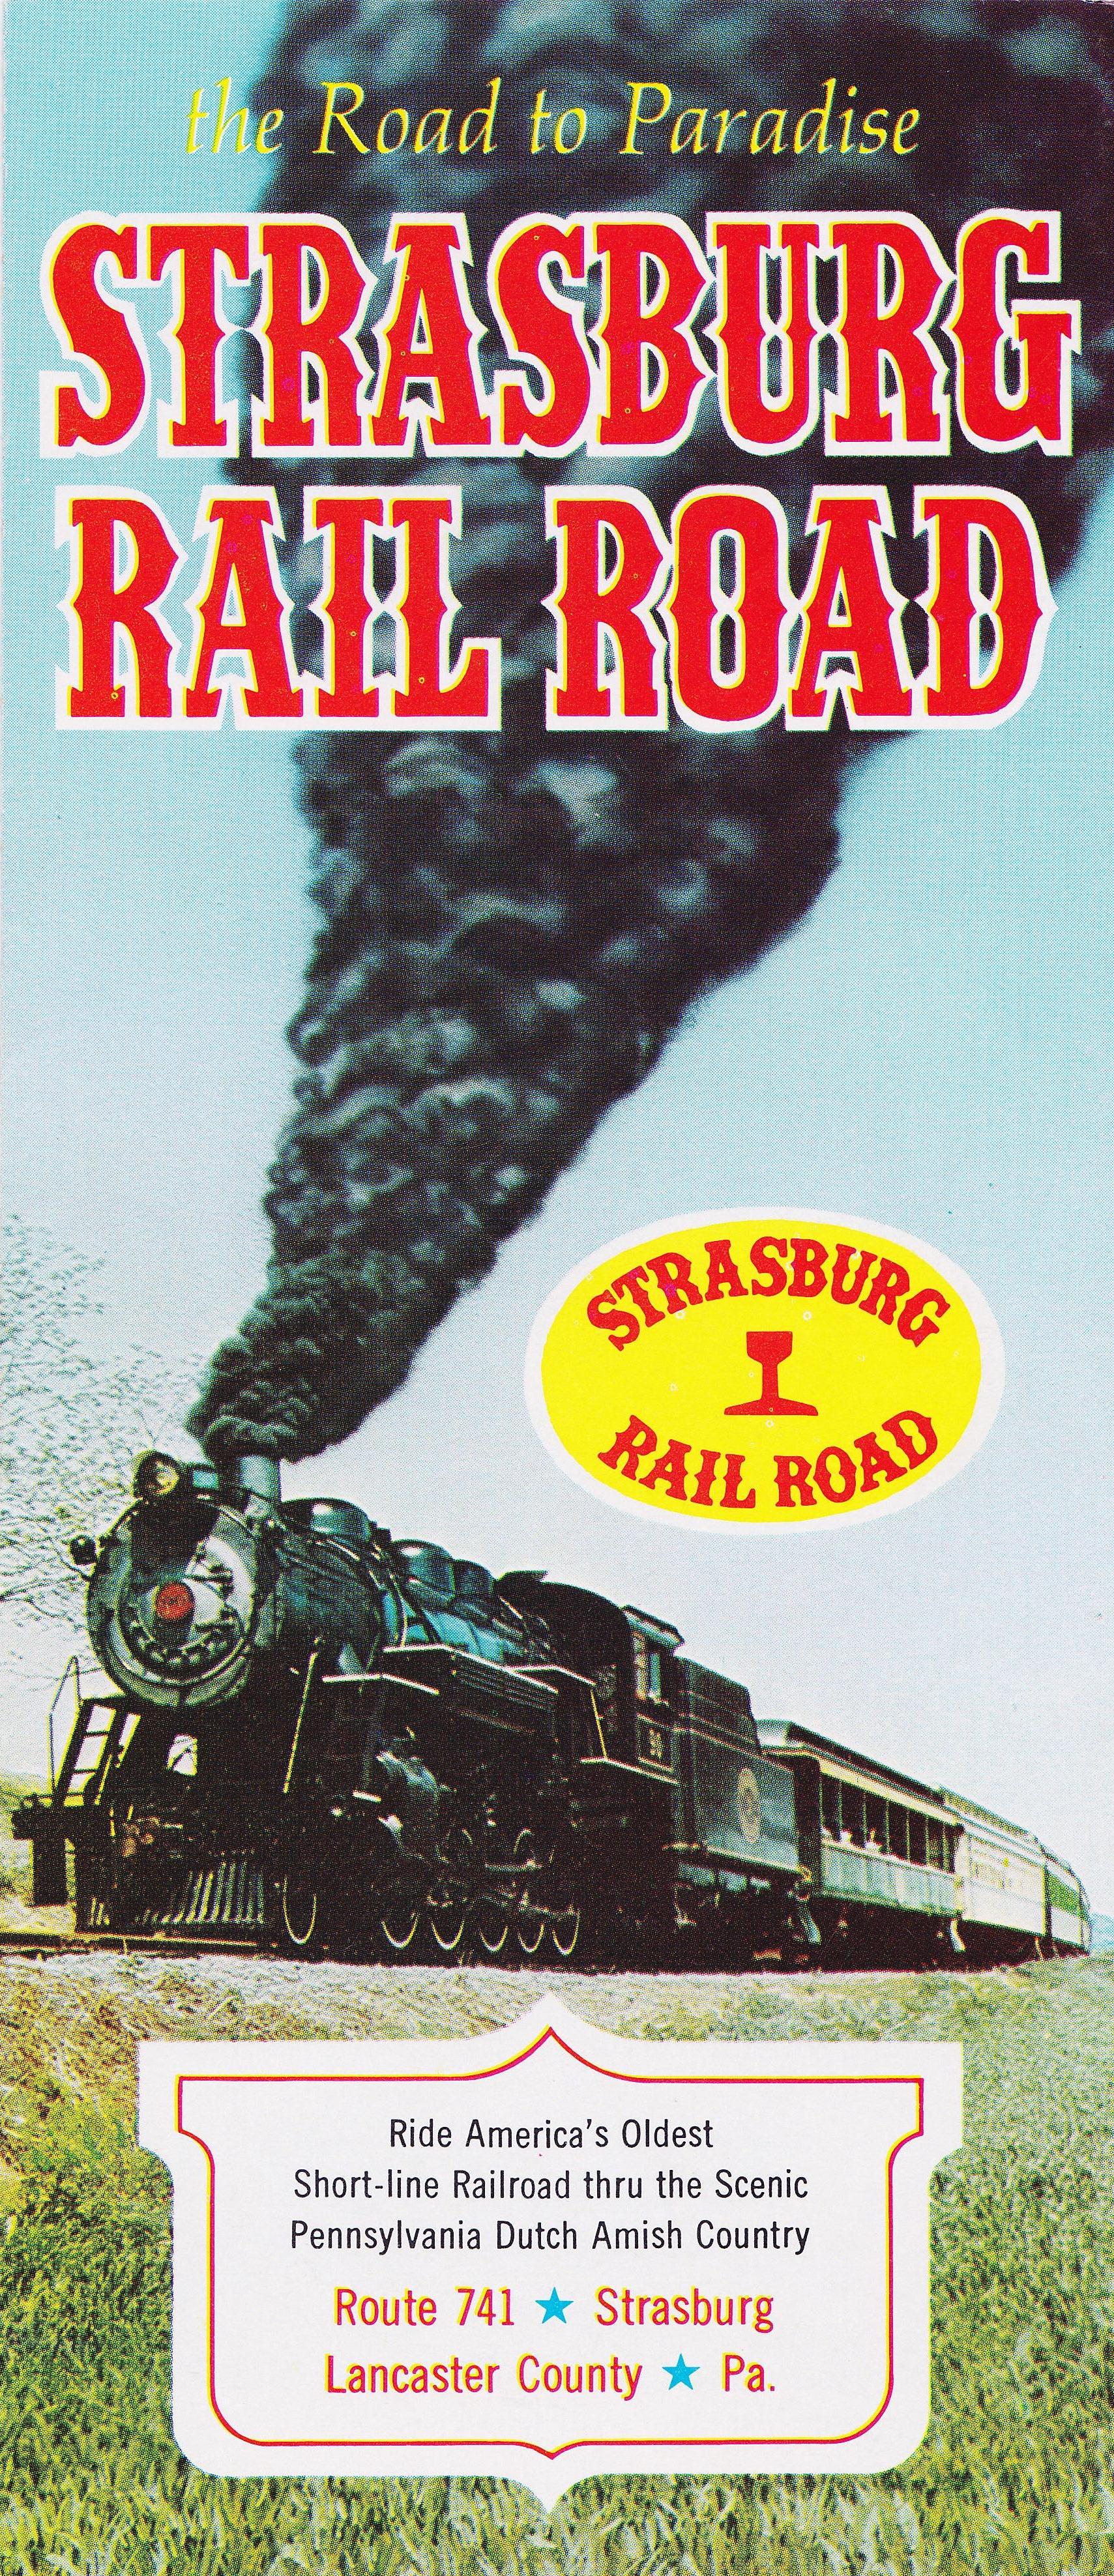 Strasburg Rail Road brochure - Strasburg, Pennsylvania U.S.A. - 1970